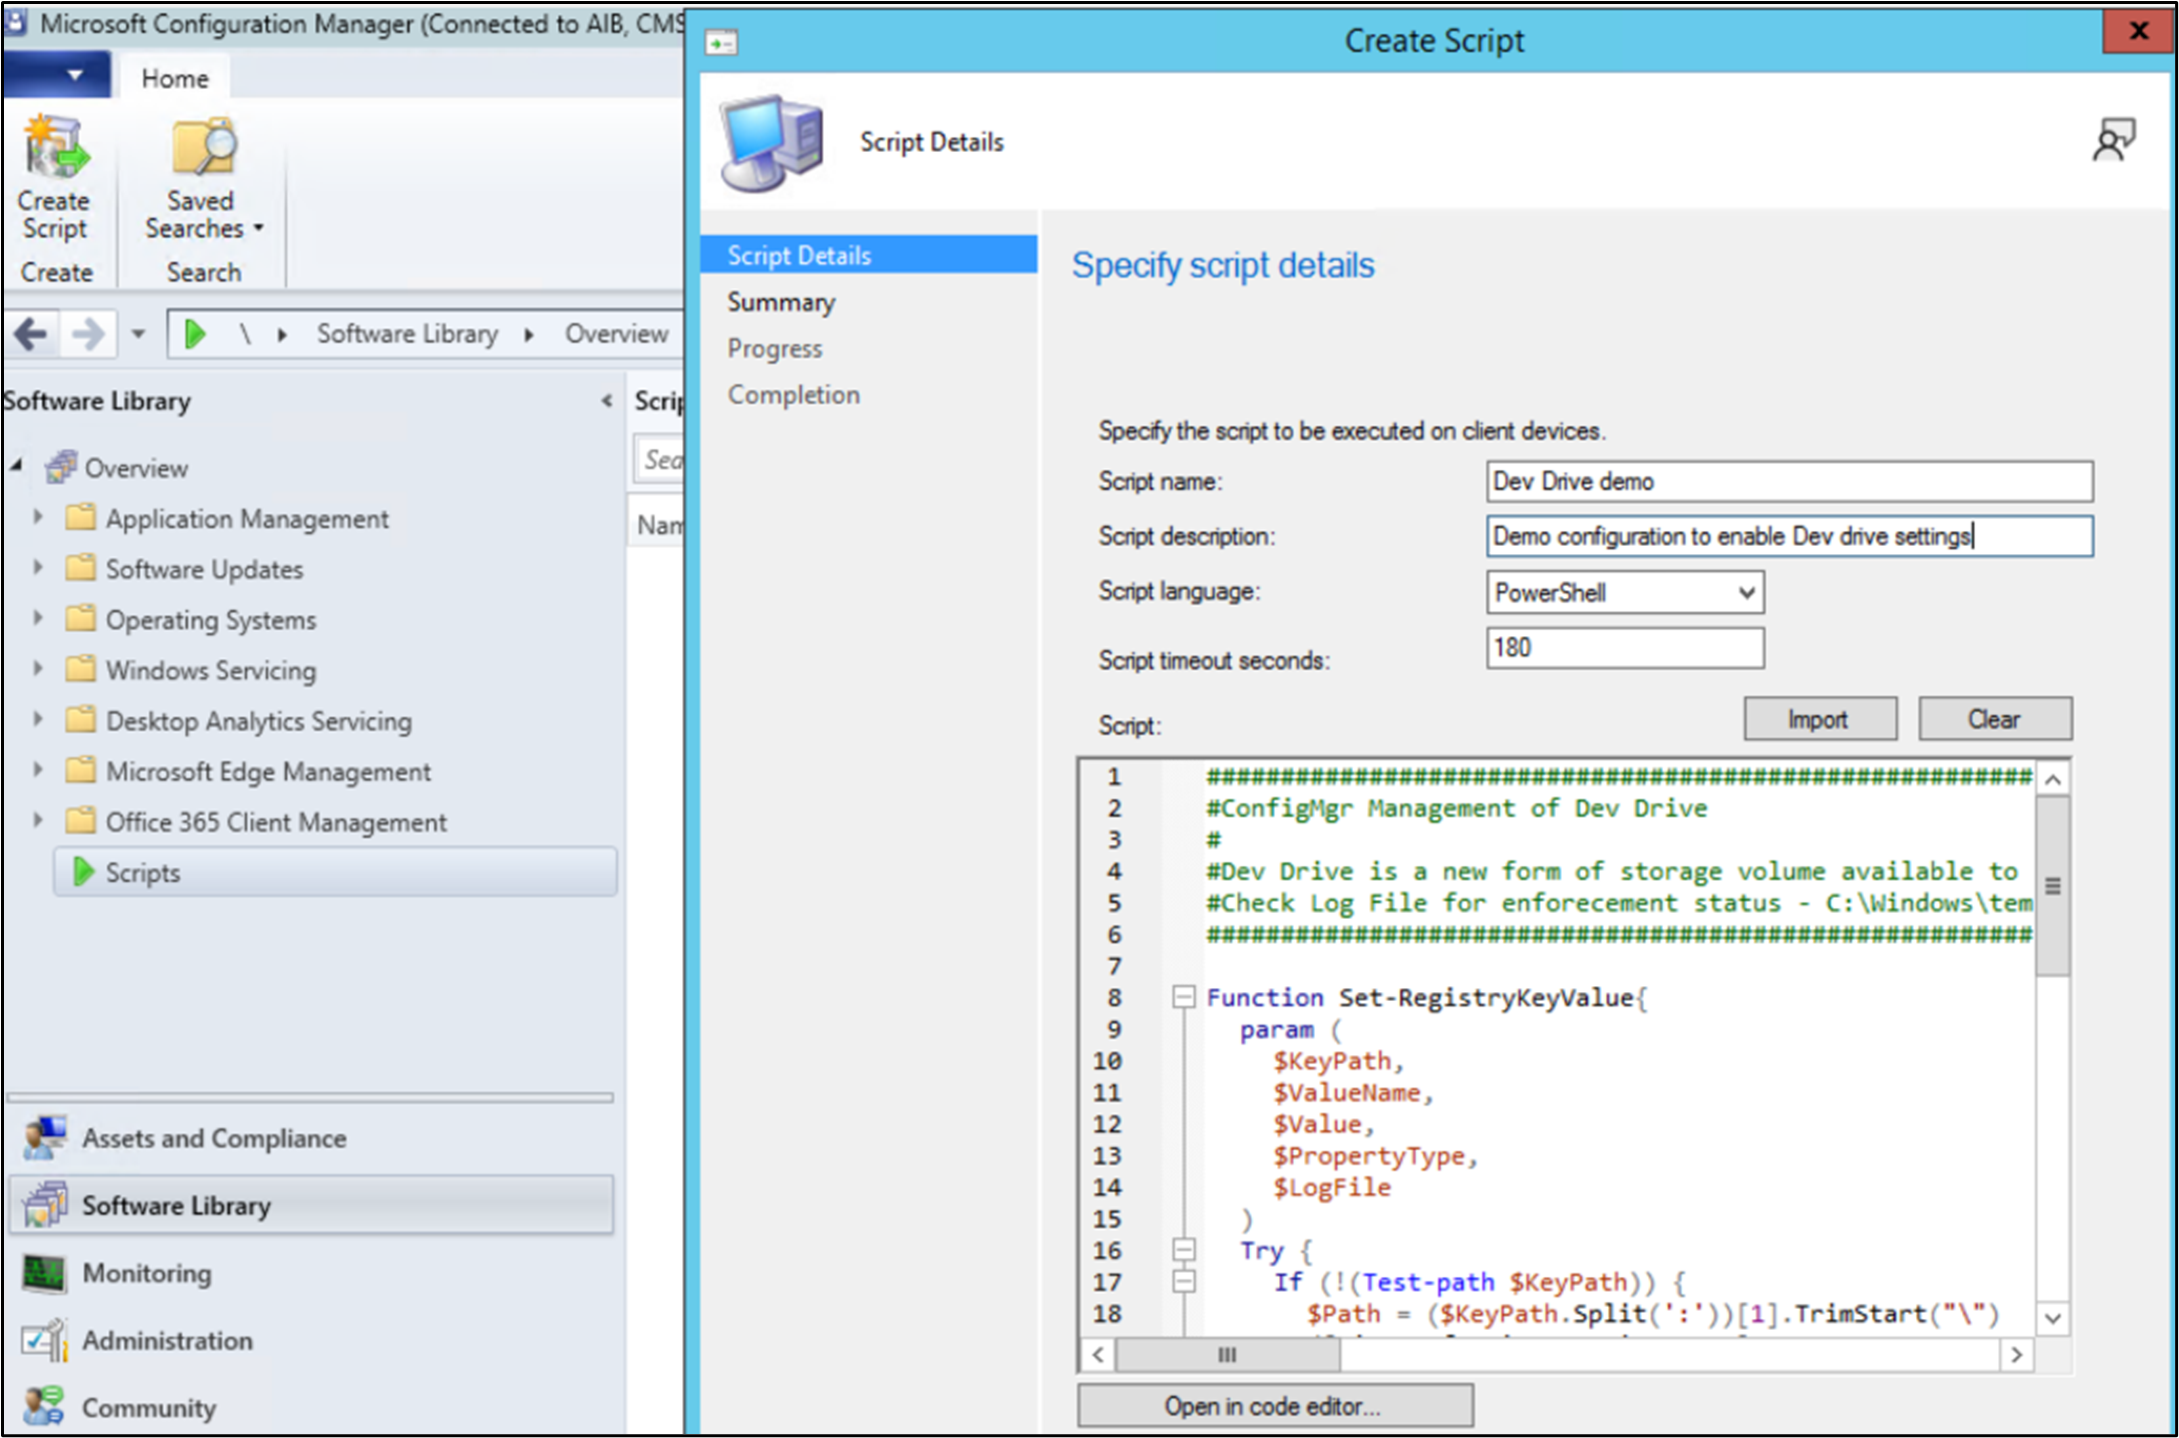 Screenshot of Microsoft Configuration Manager Create Script window showing details including script name, description, language, timeout seconds and the actual script